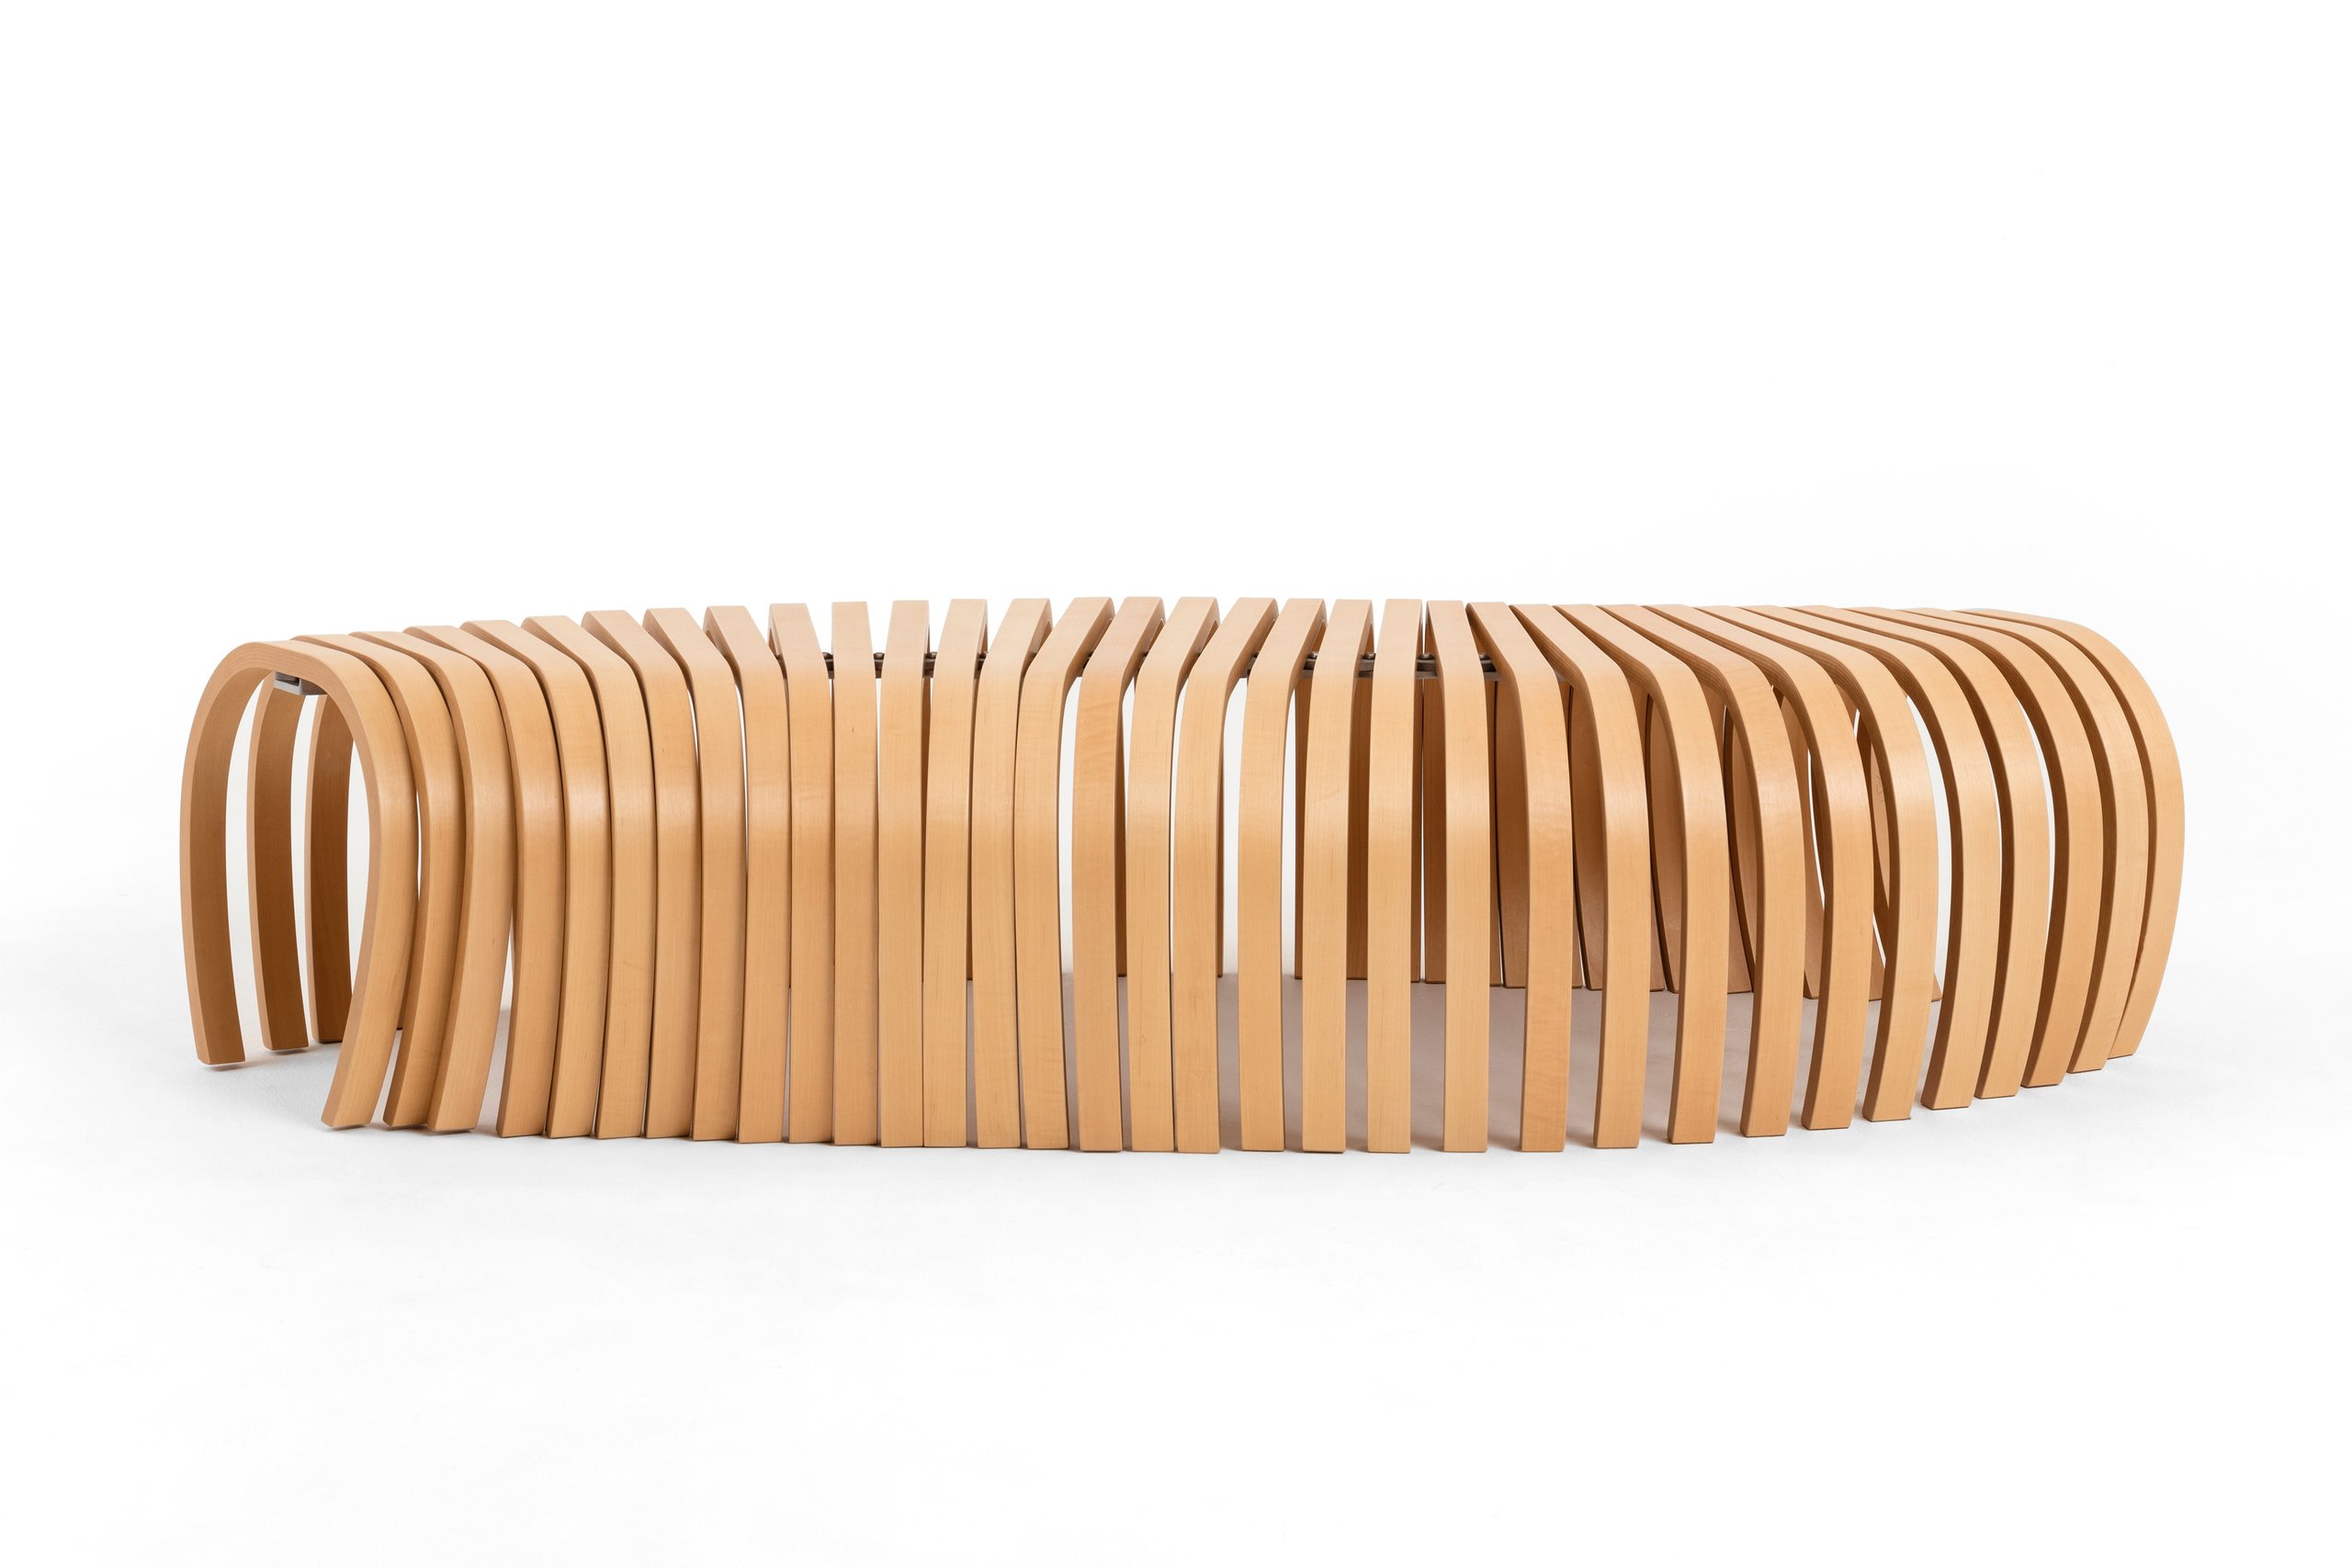 'Ribs Bench' by Stefan Lie